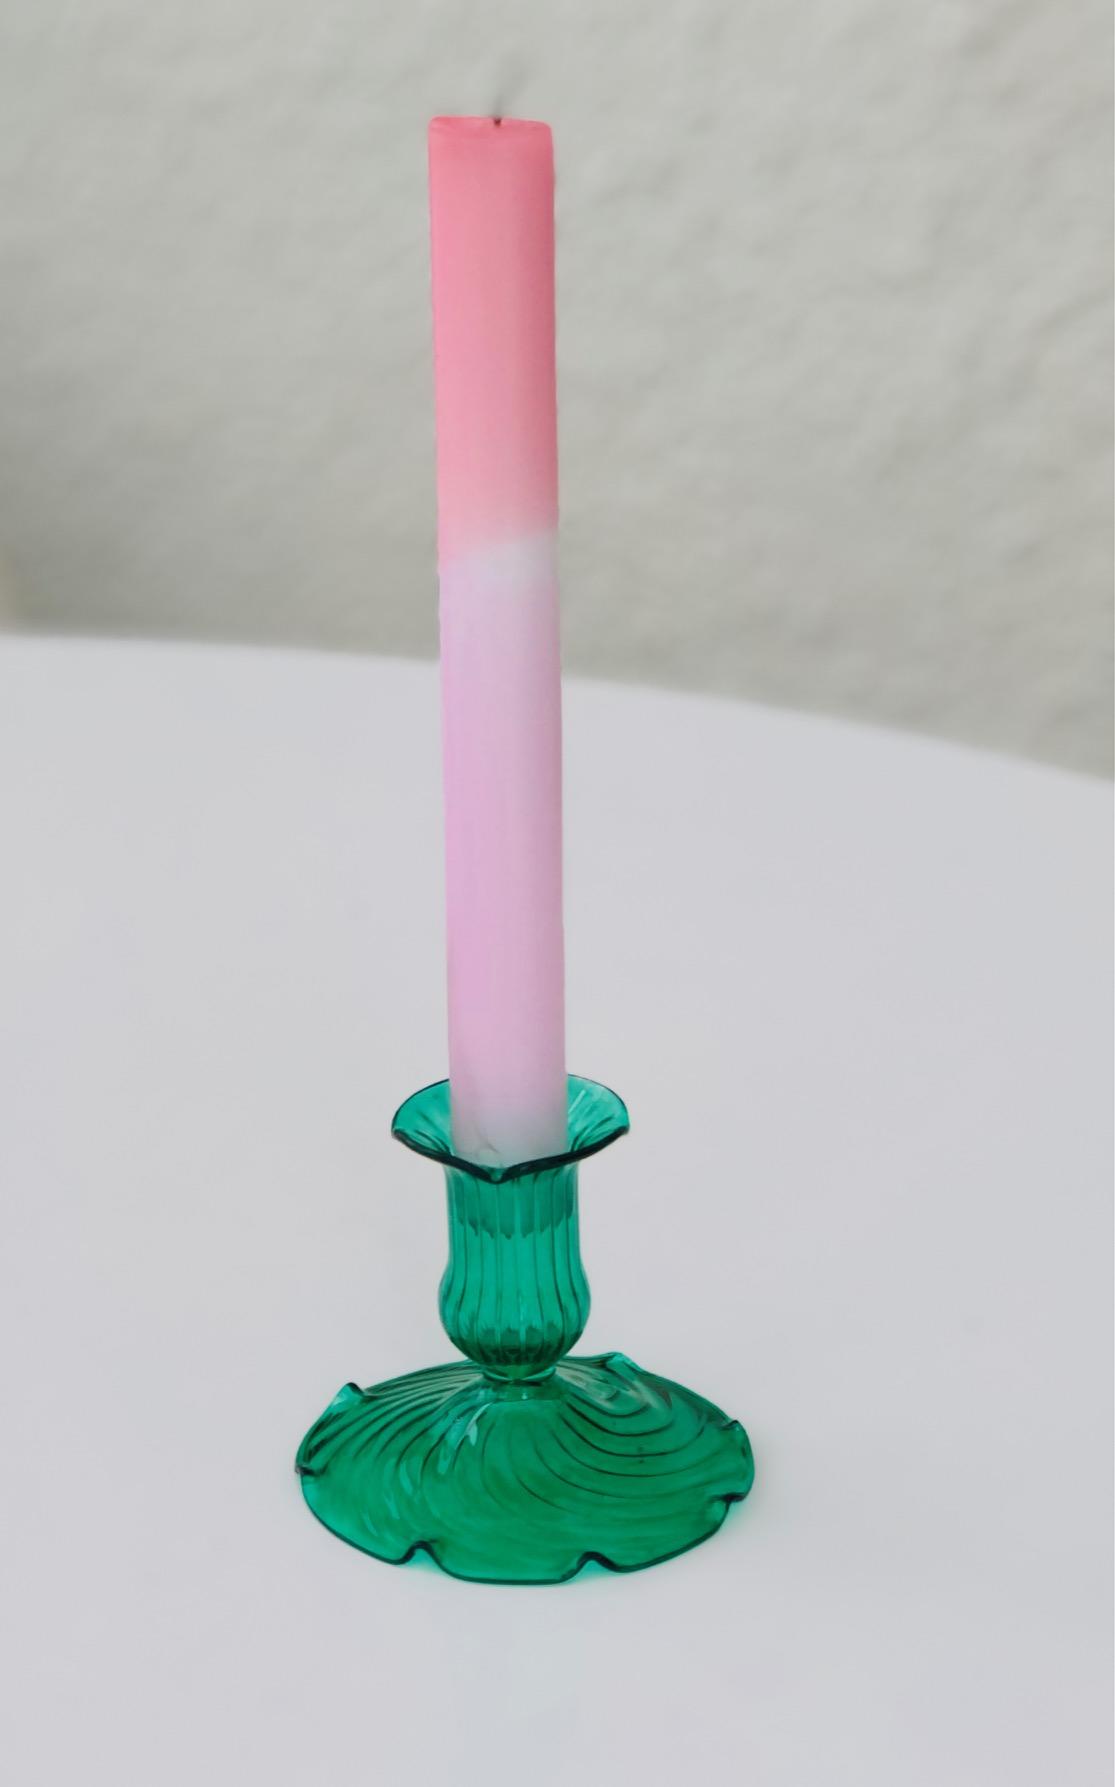 Vida de Verano small candlestick